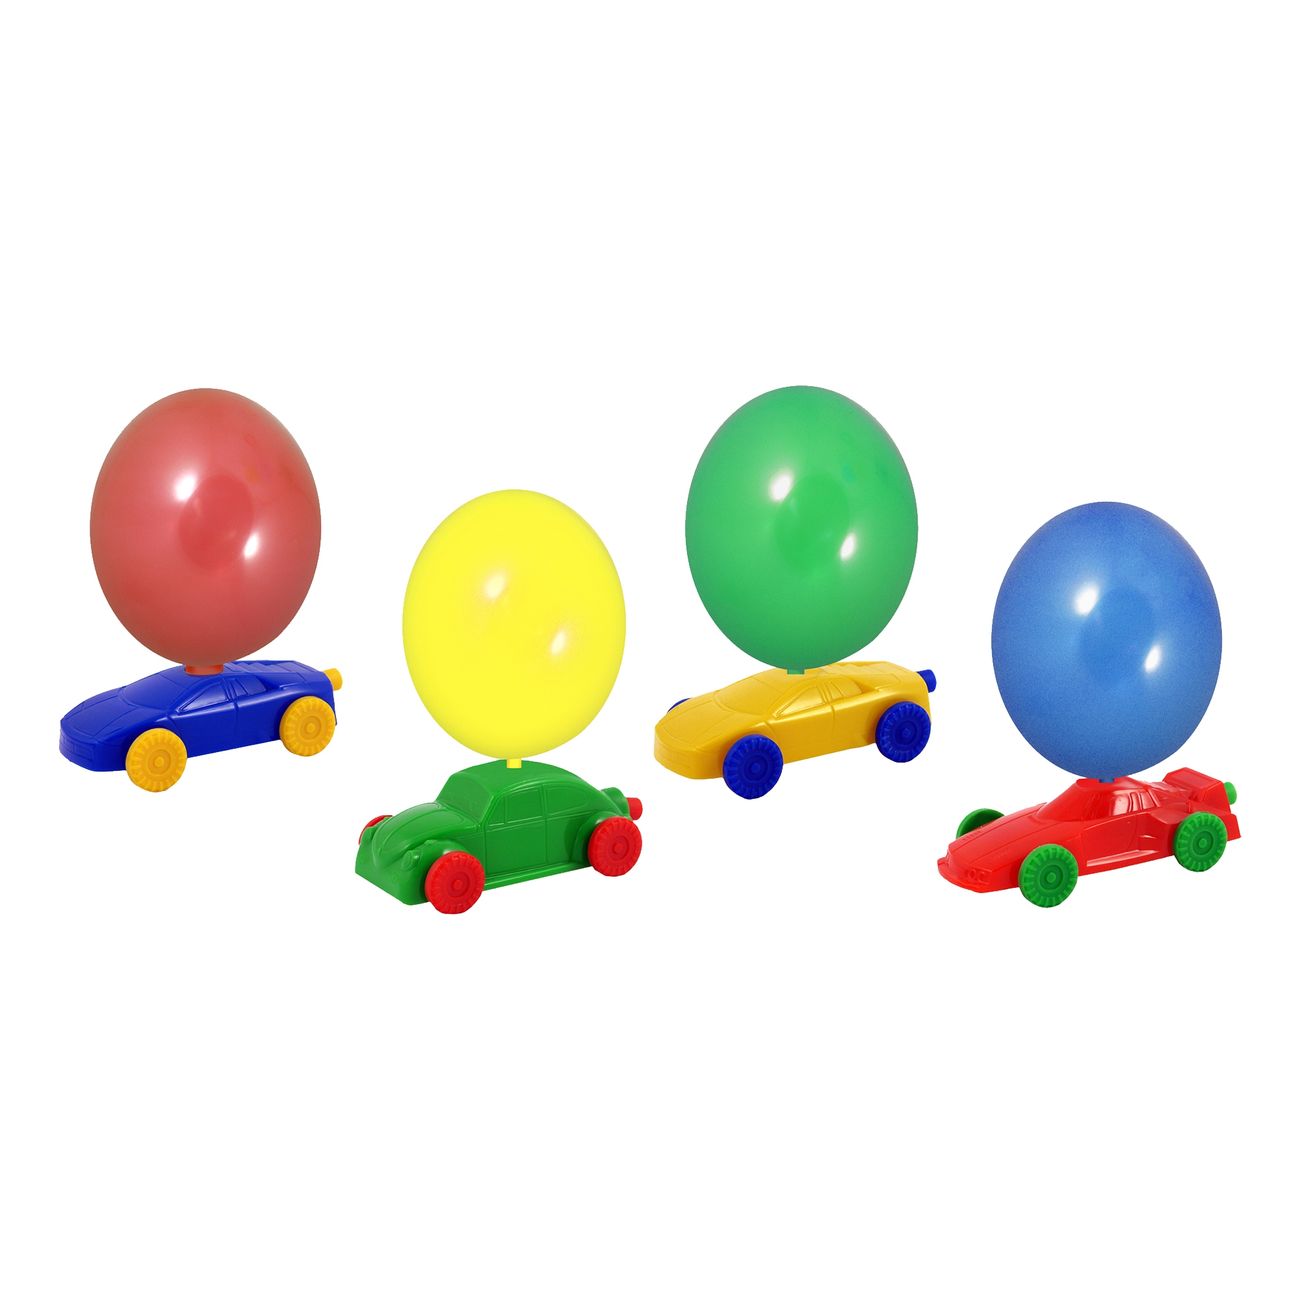 racerbil-med-ballong-leksak-88809-1